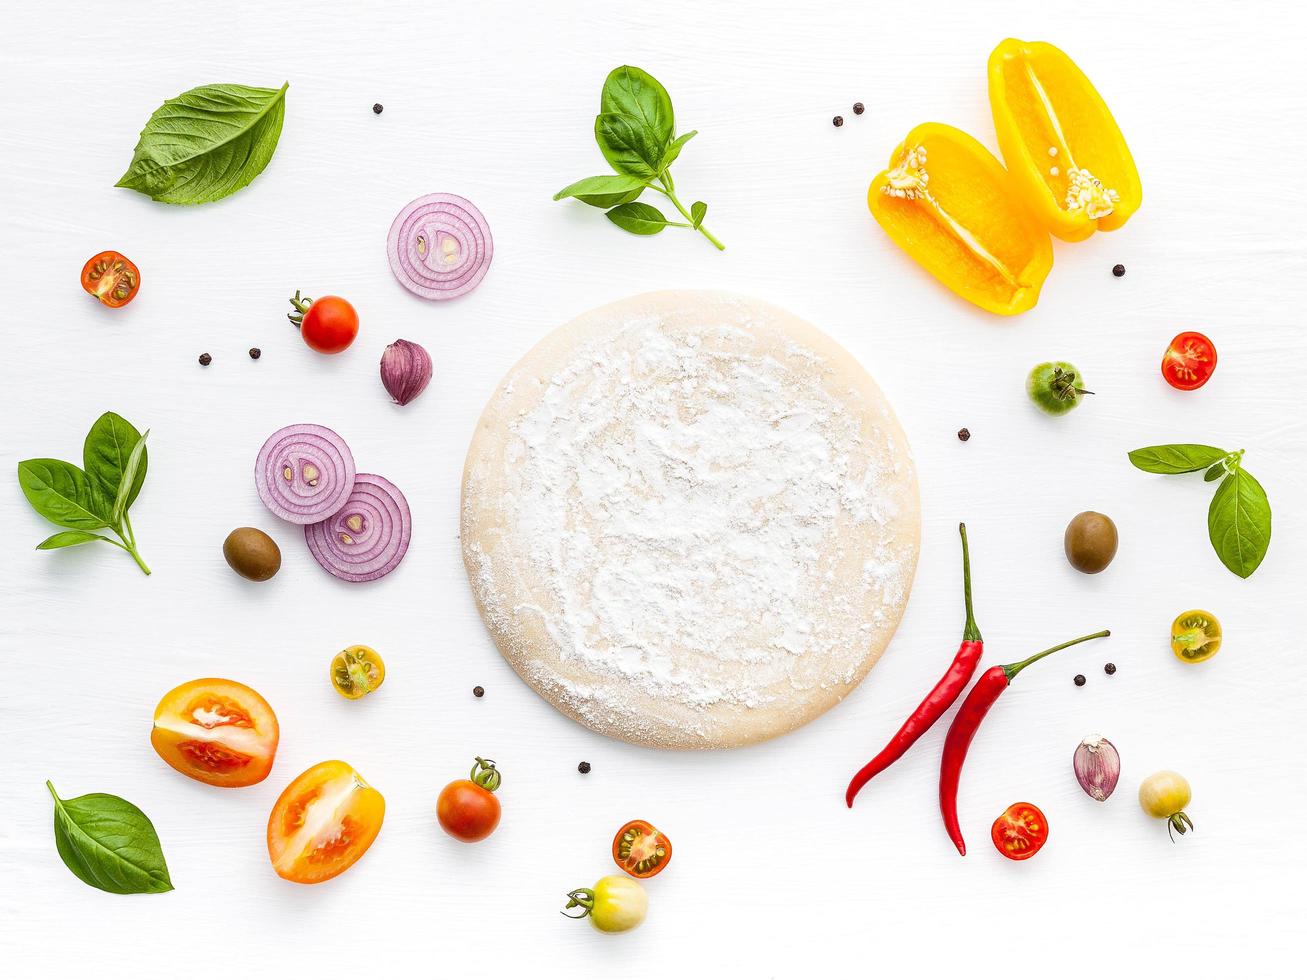 pizzaingredienser som isoleras på vit foto